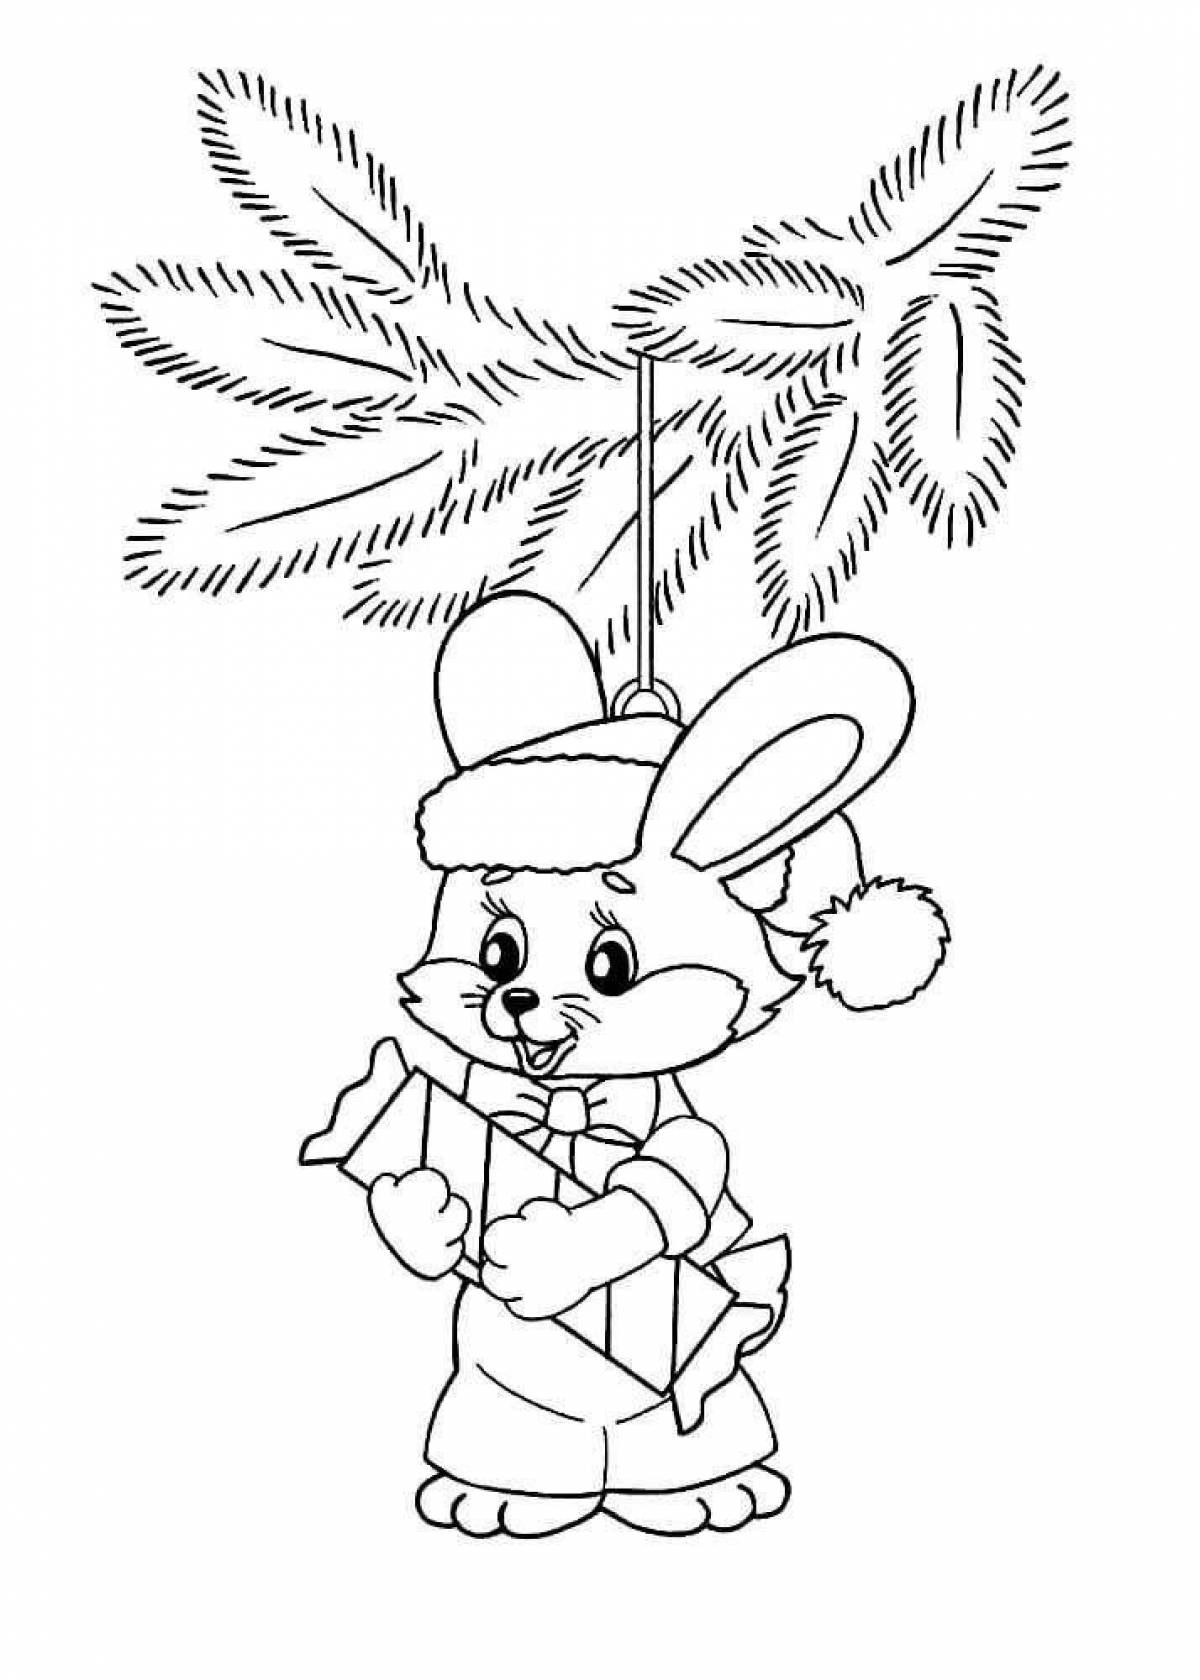 Happy coloring rabbit new year